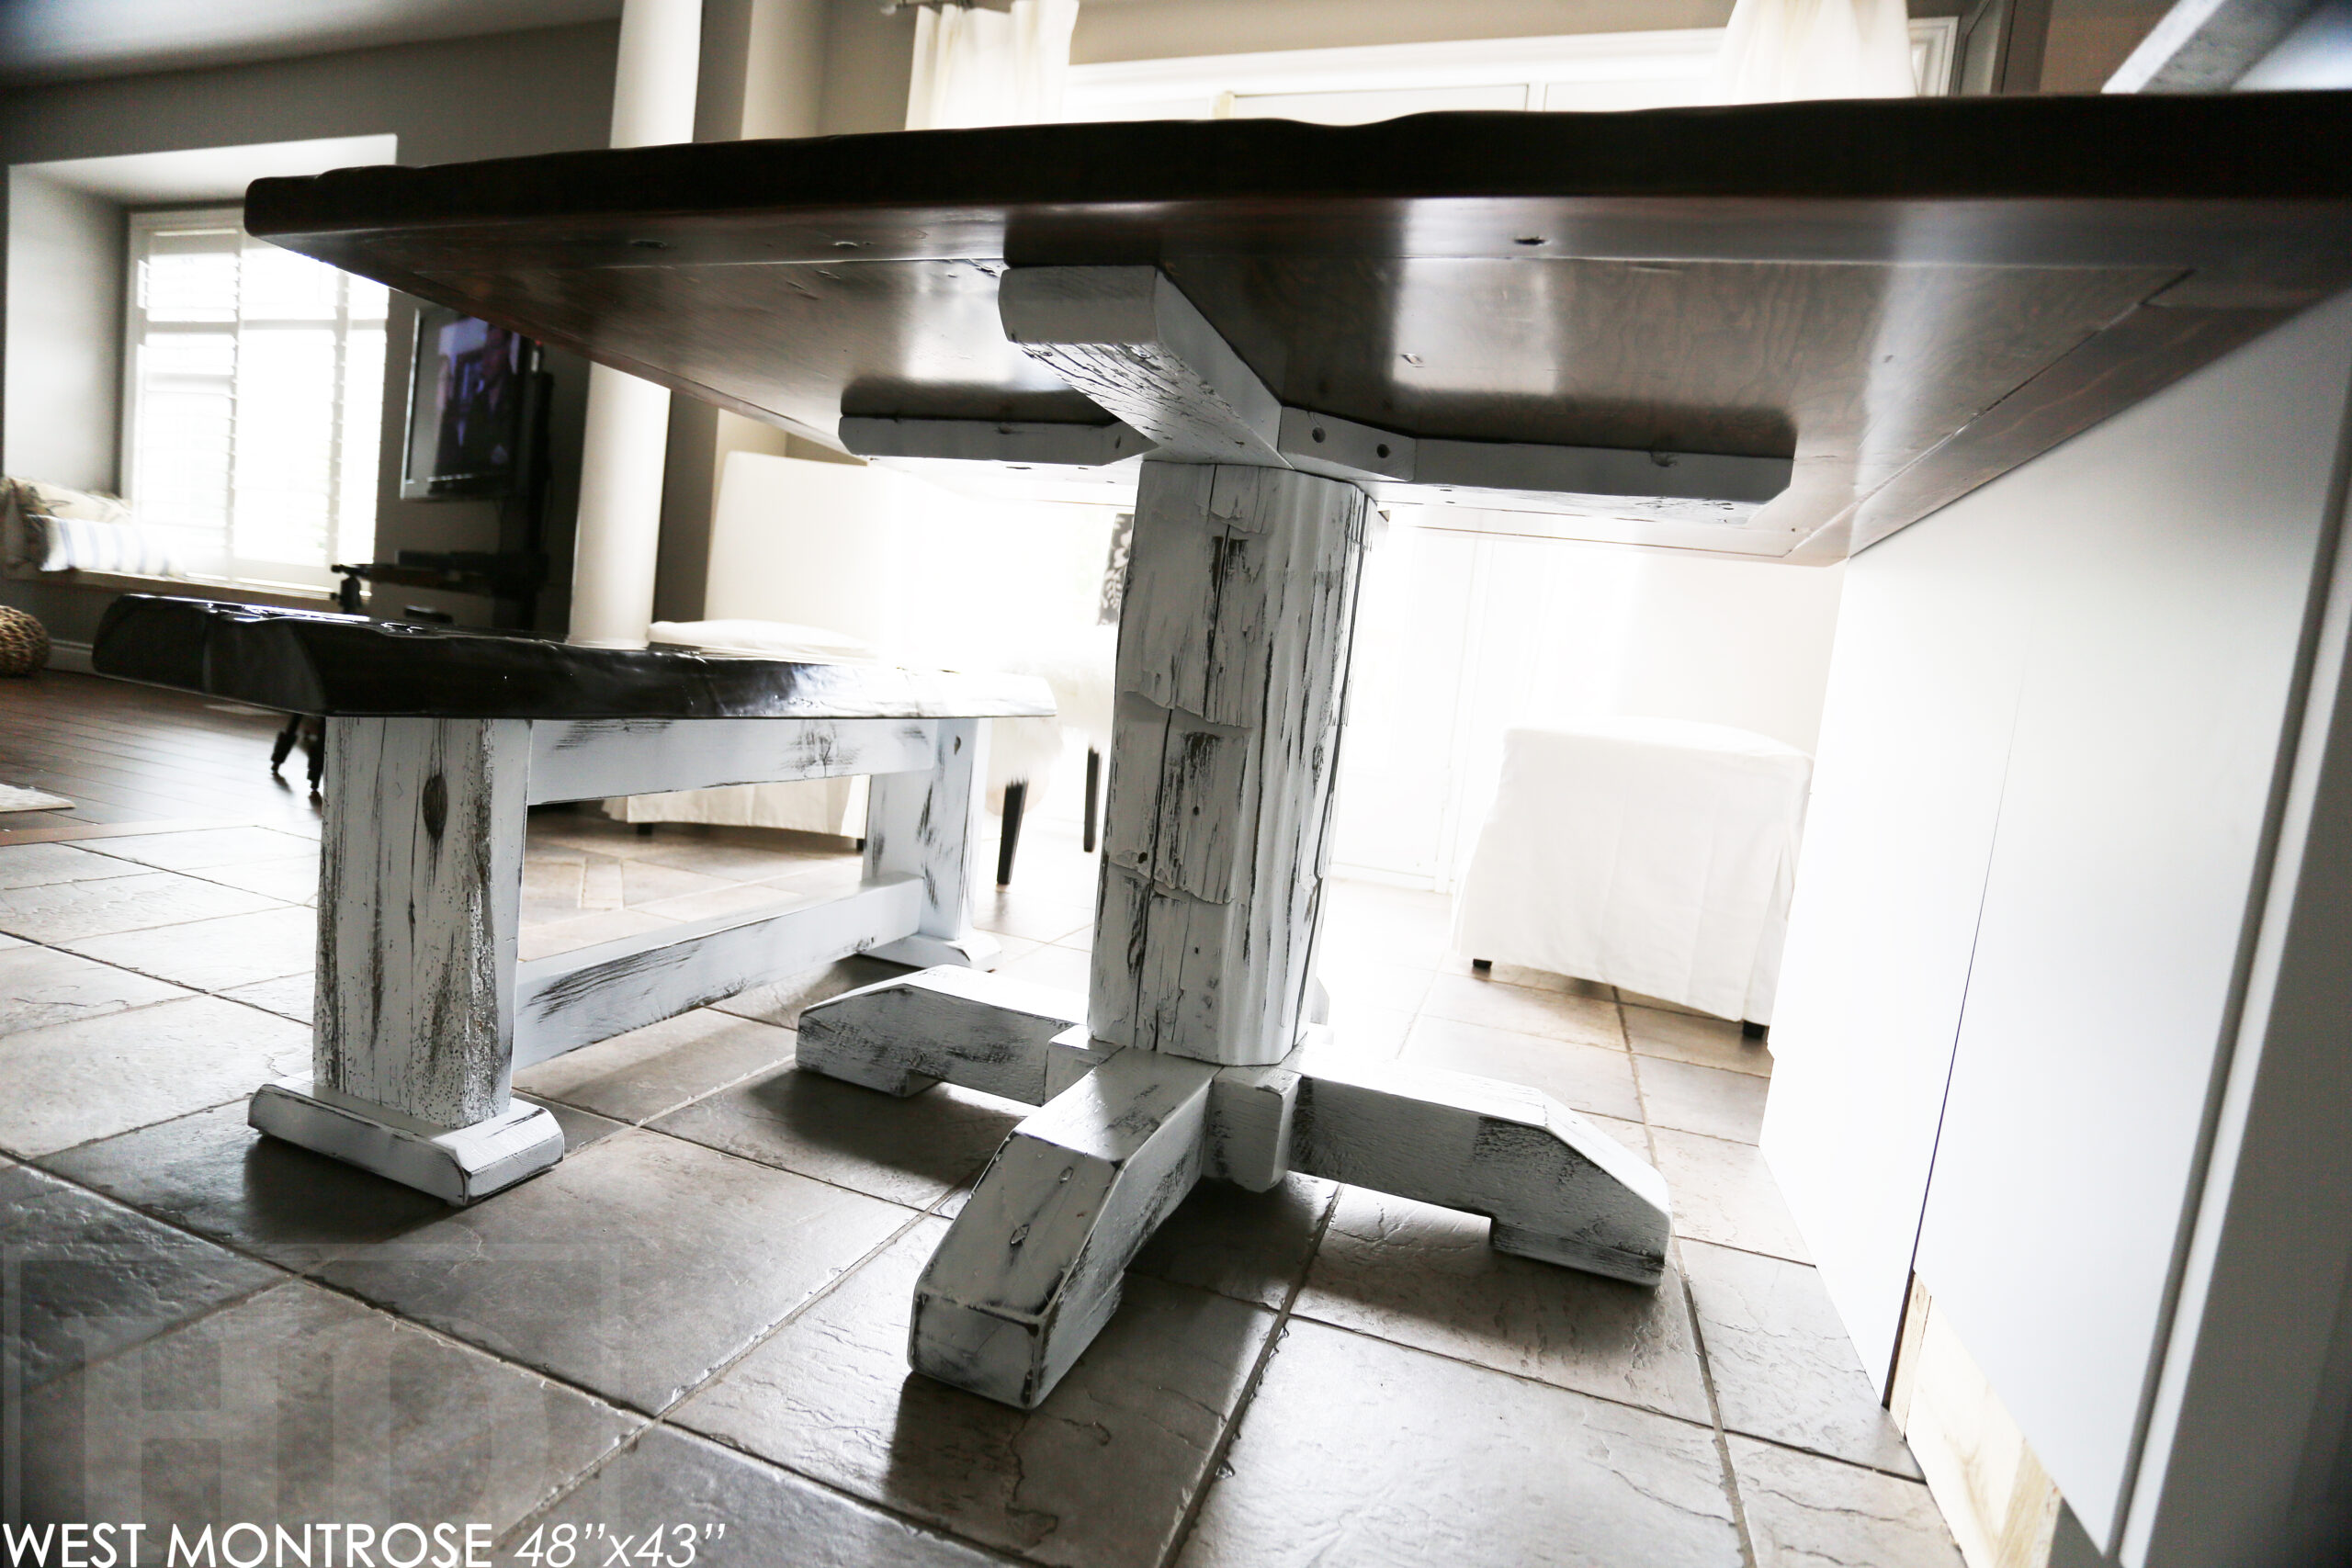 Reclaimed Wood Table with Barnboard Greytone Treatment Option by HD Threshing Floor Furniture / www.table.ca